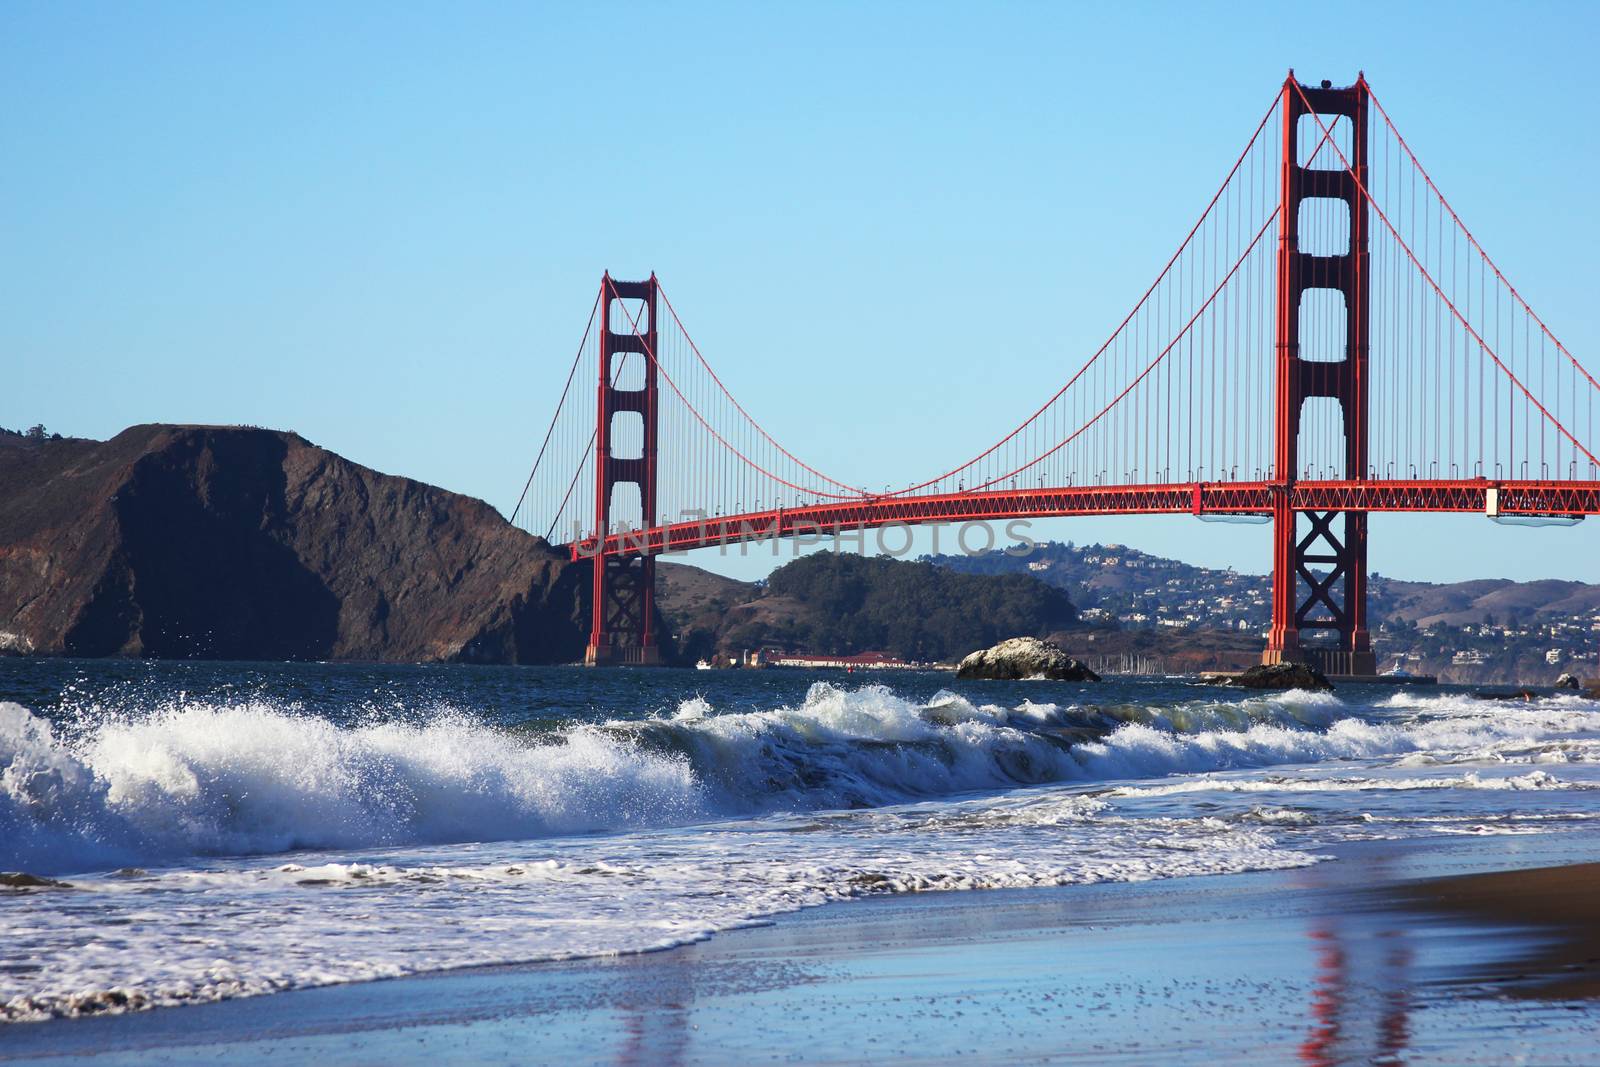 Baker Beach underneath the Golden Gate Bridge in San Francisco. California